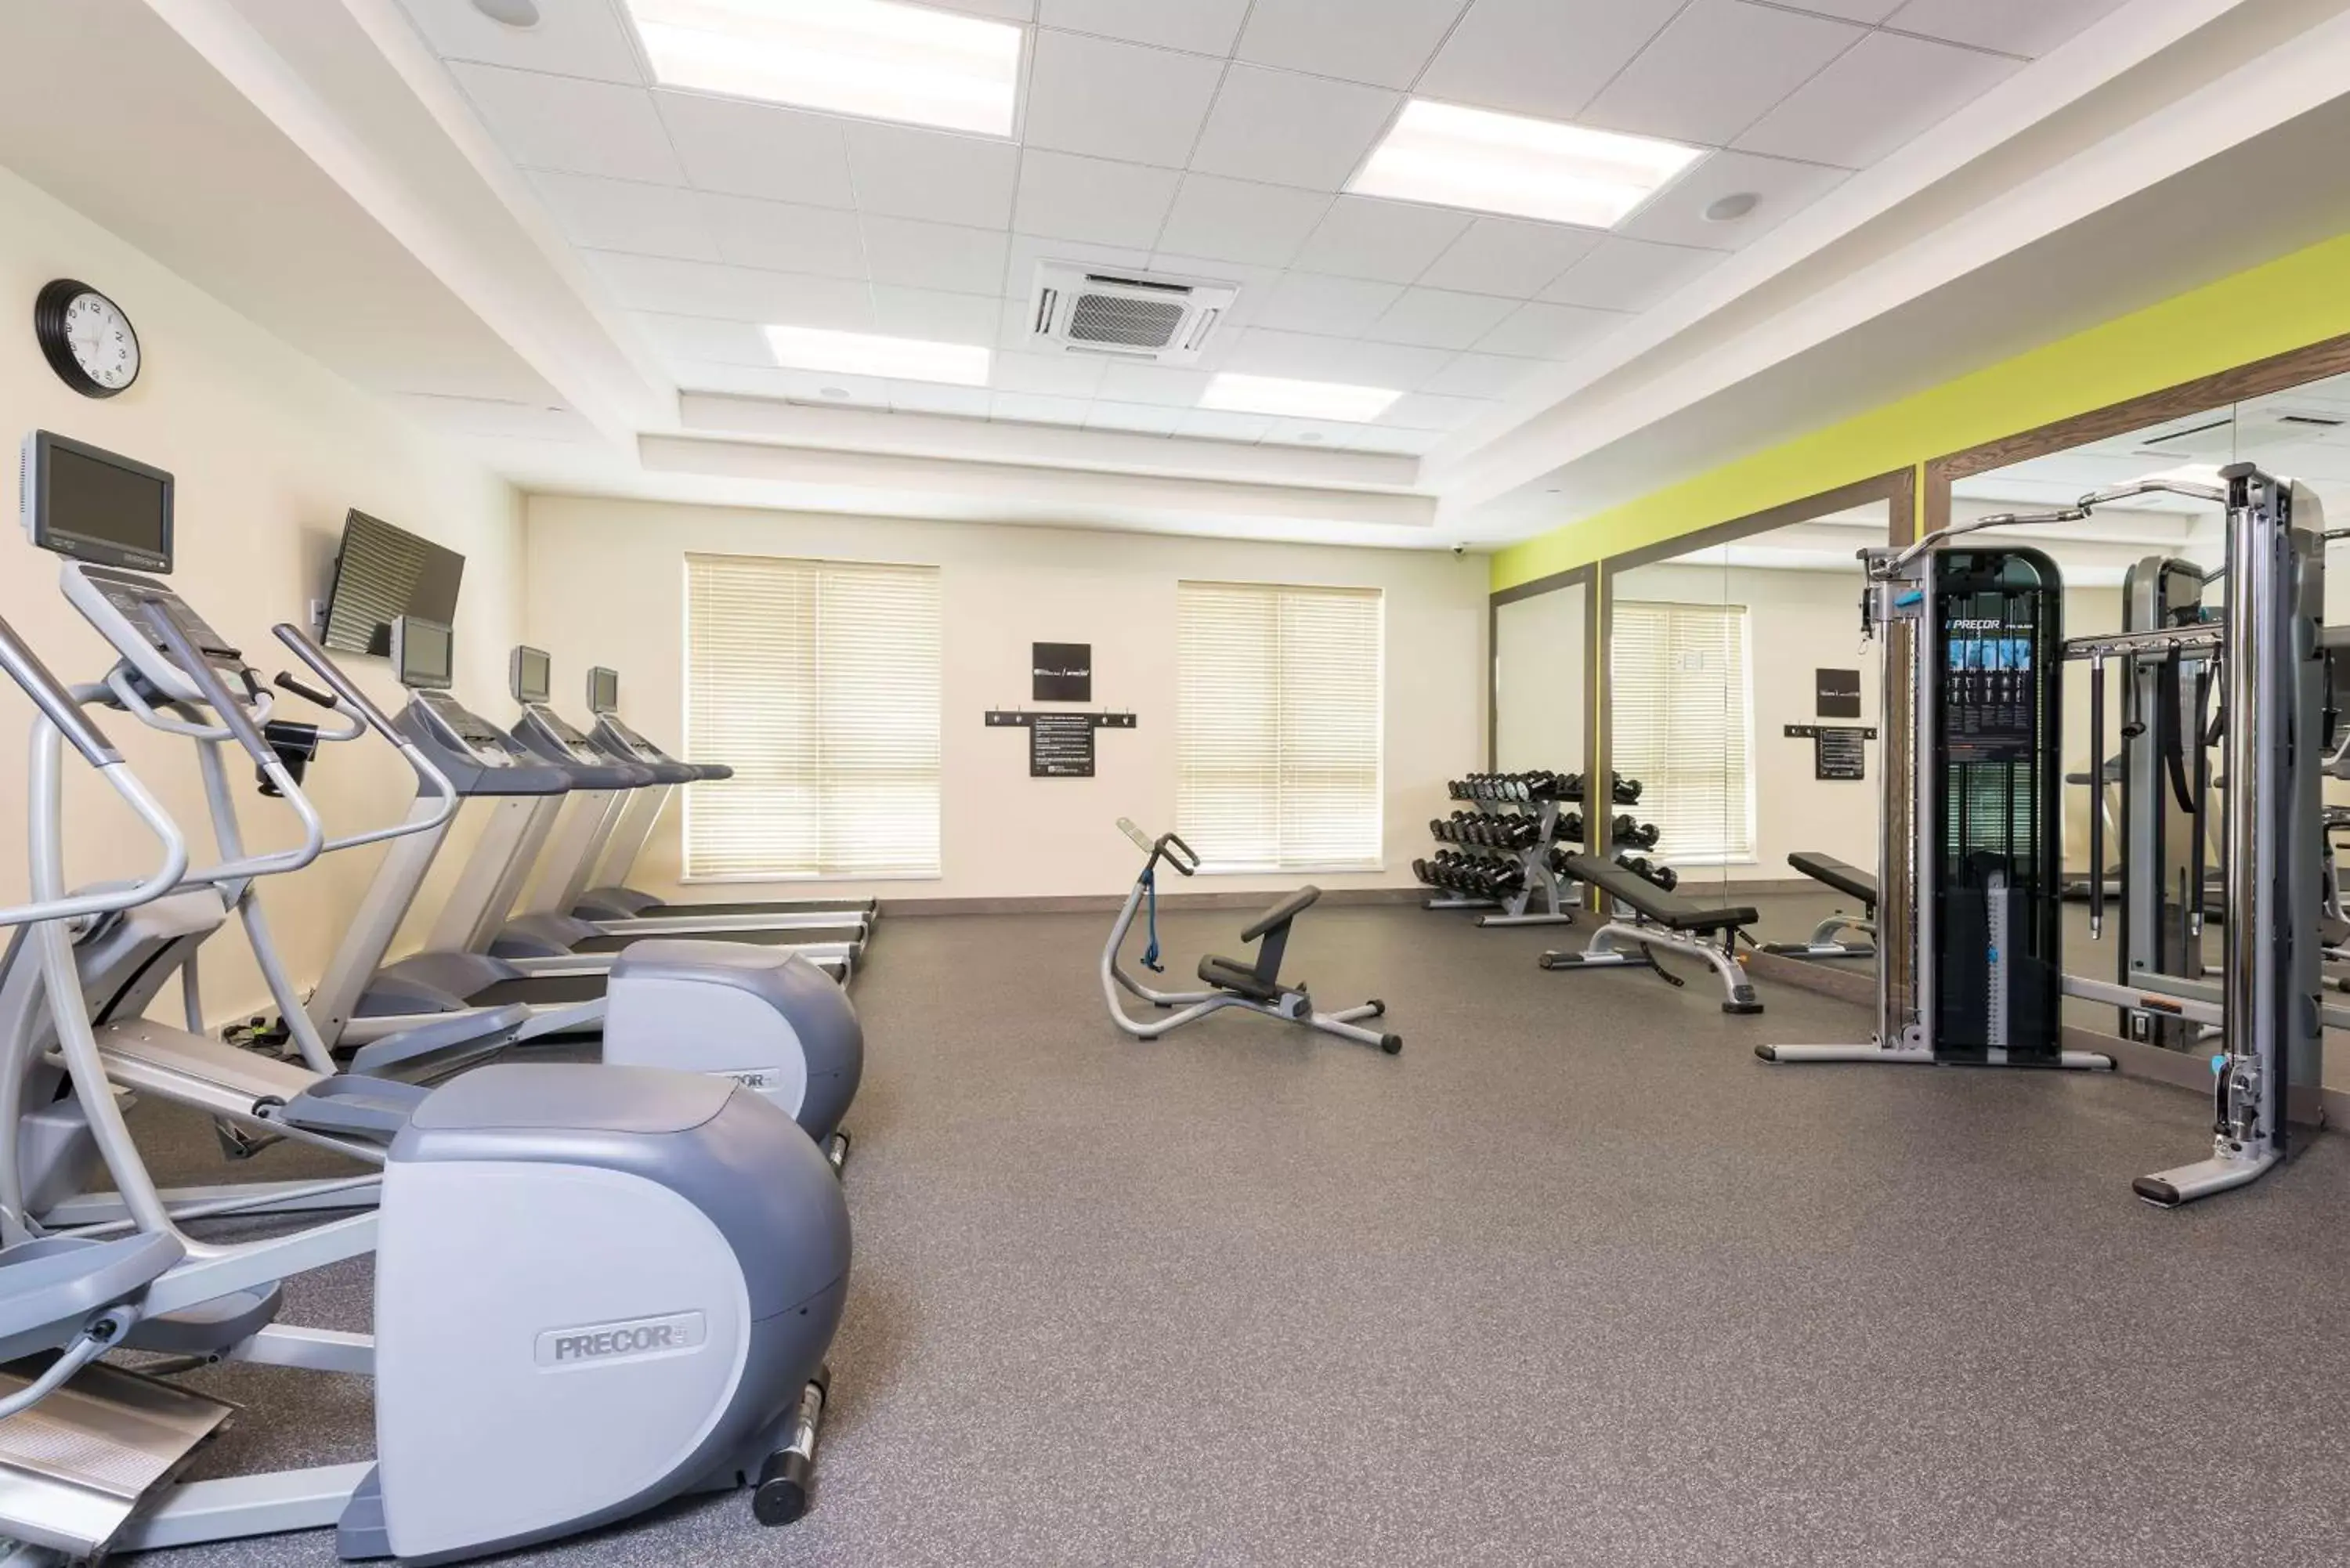 Fitness centre/facilities, Fitness Center/Facilities in Hilton Garden Inn Grand Rapids East